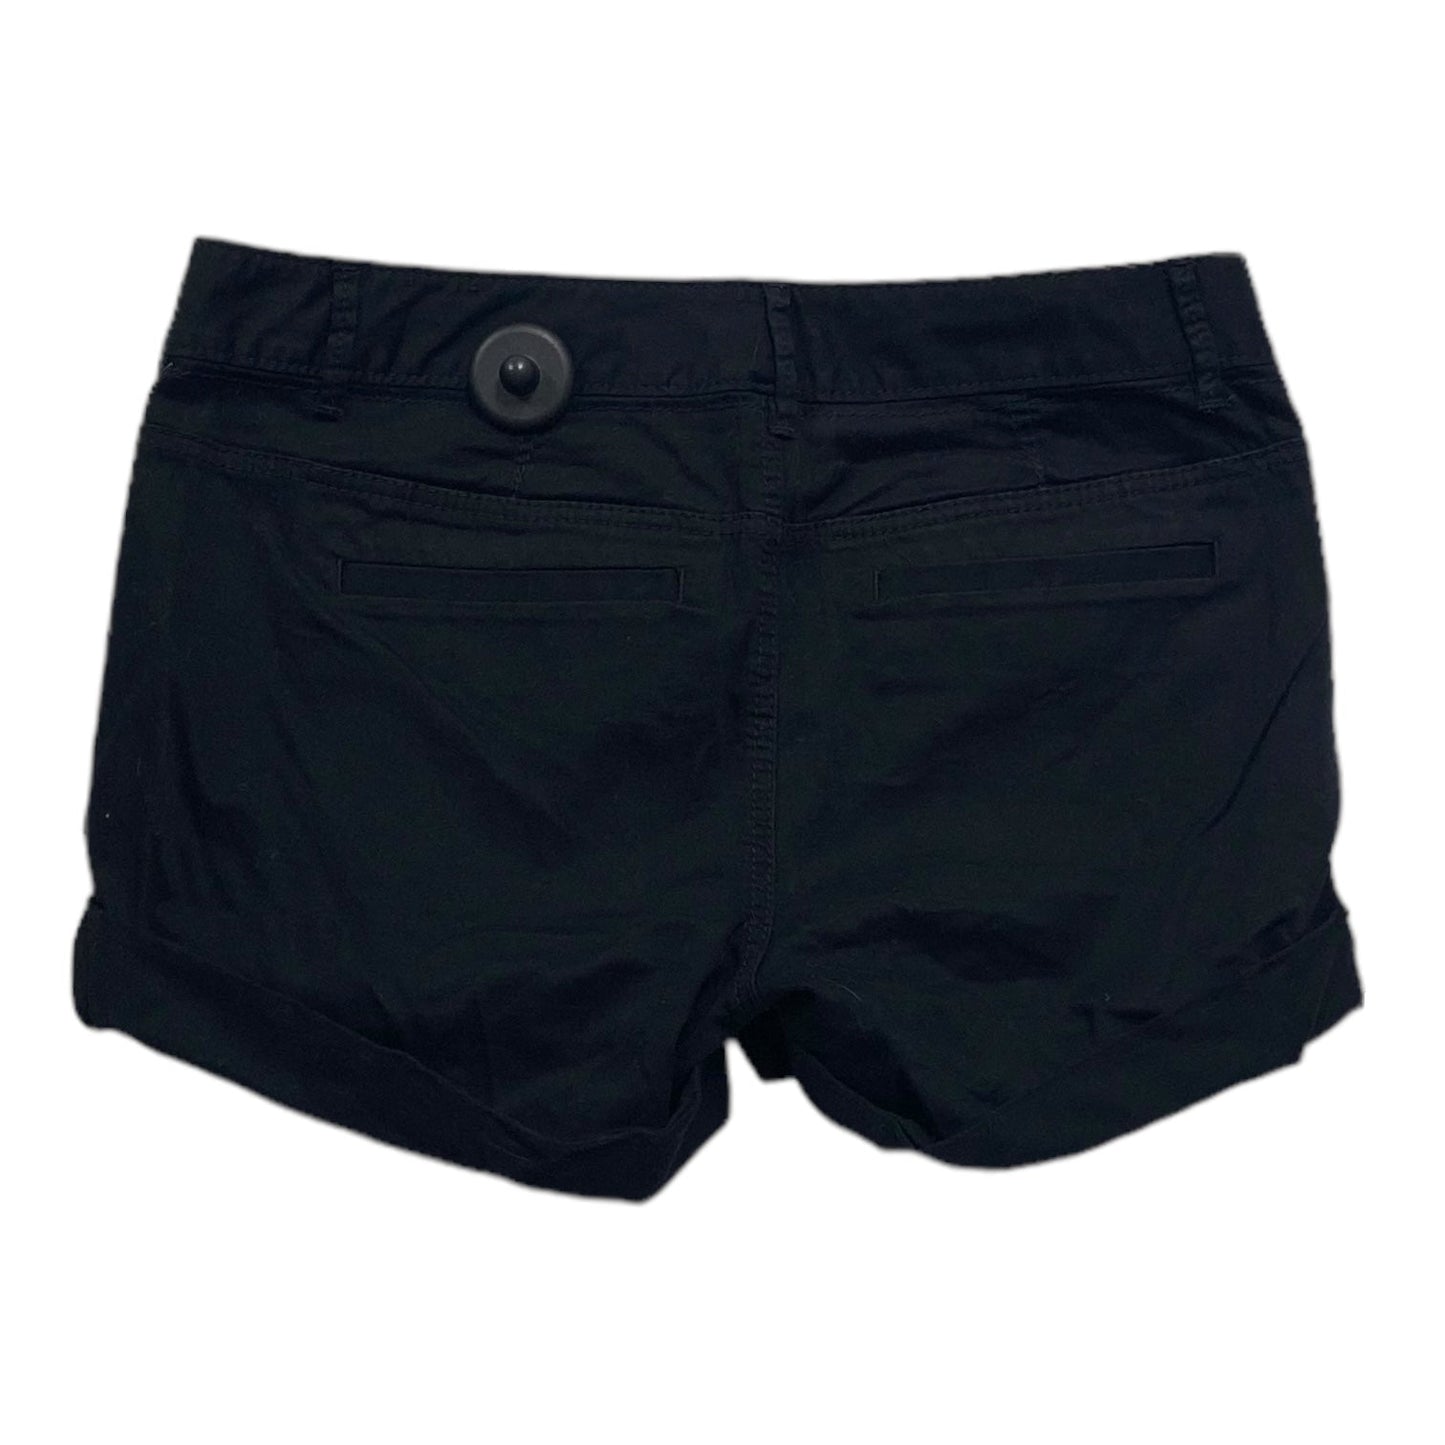 Black Shorts Express, Size 6